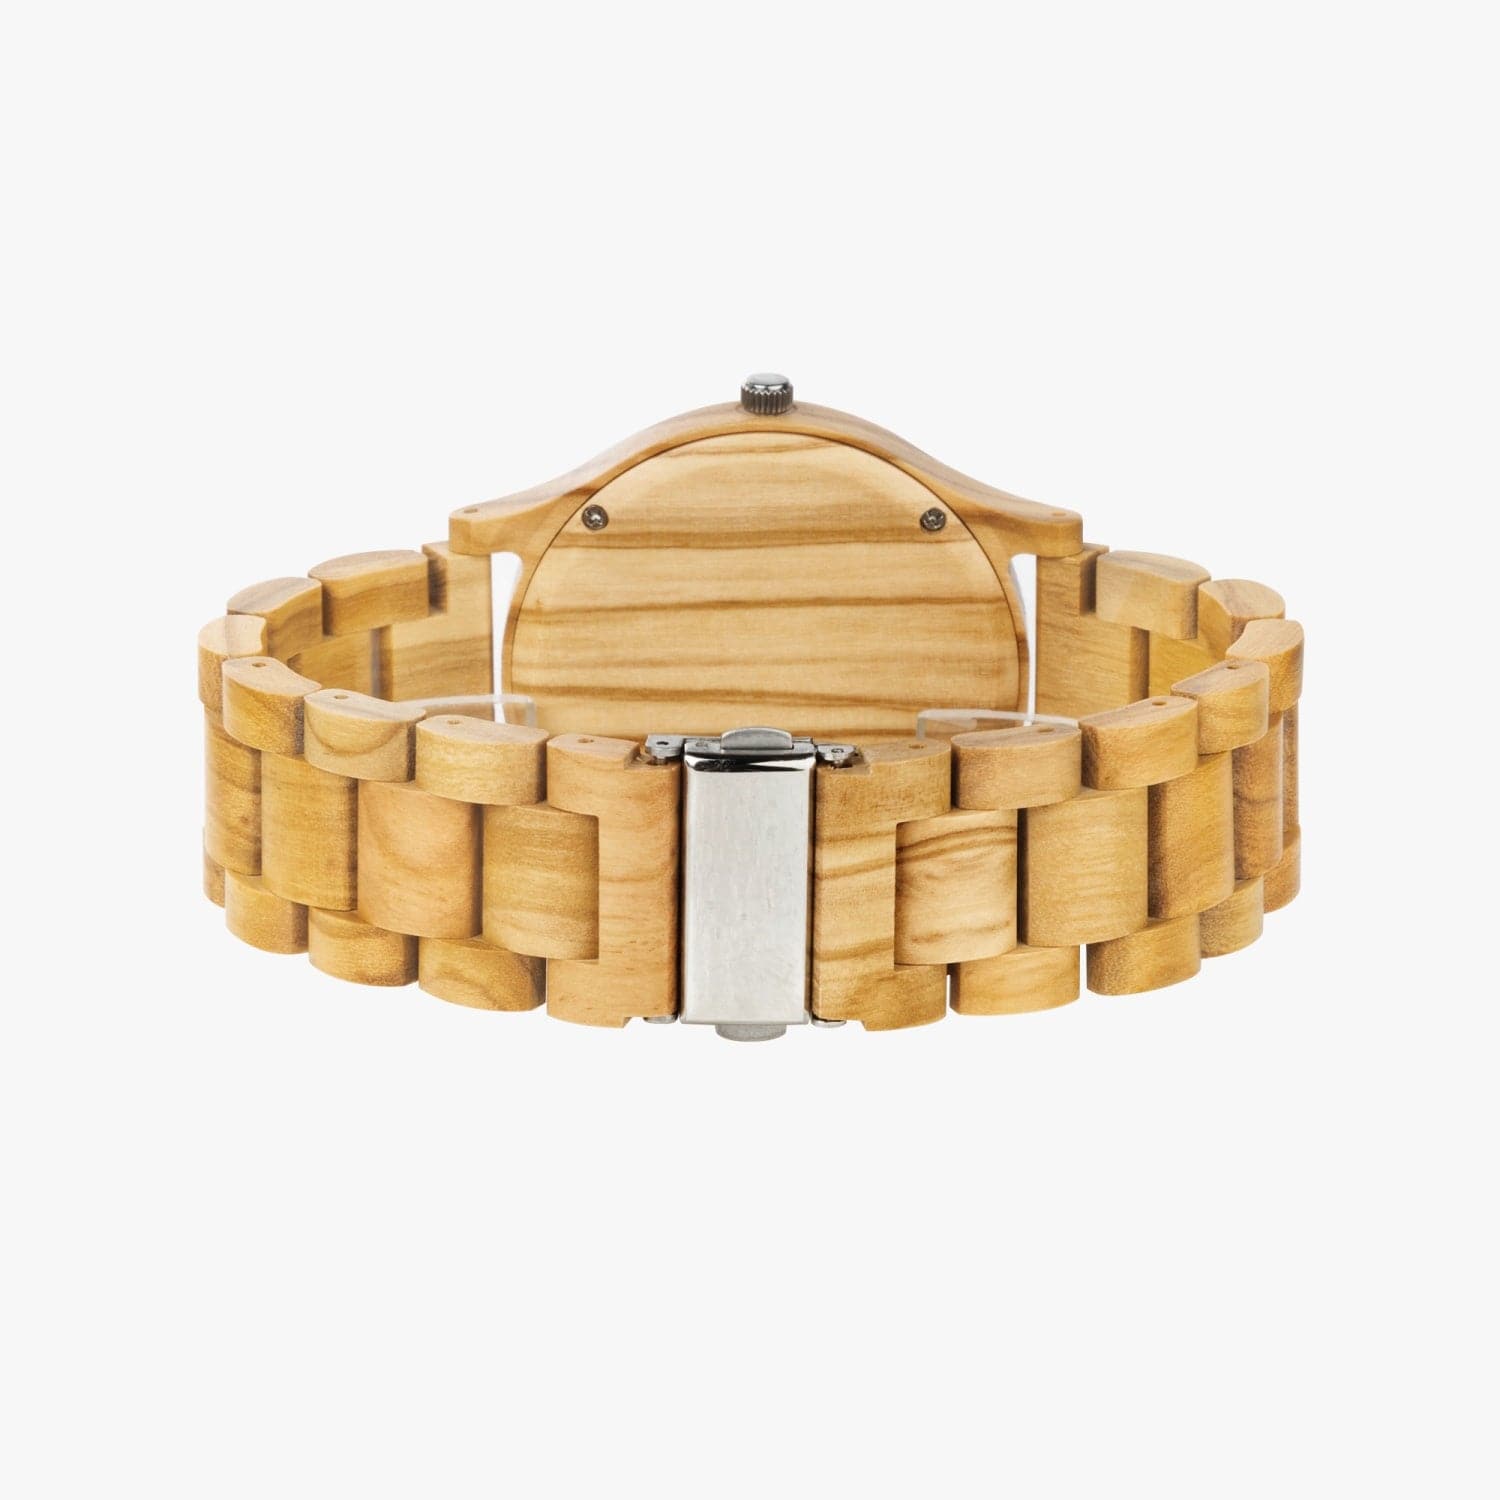 Art Nouveau Watch; Olive Lumber Wooden Watch by Sensus Studio